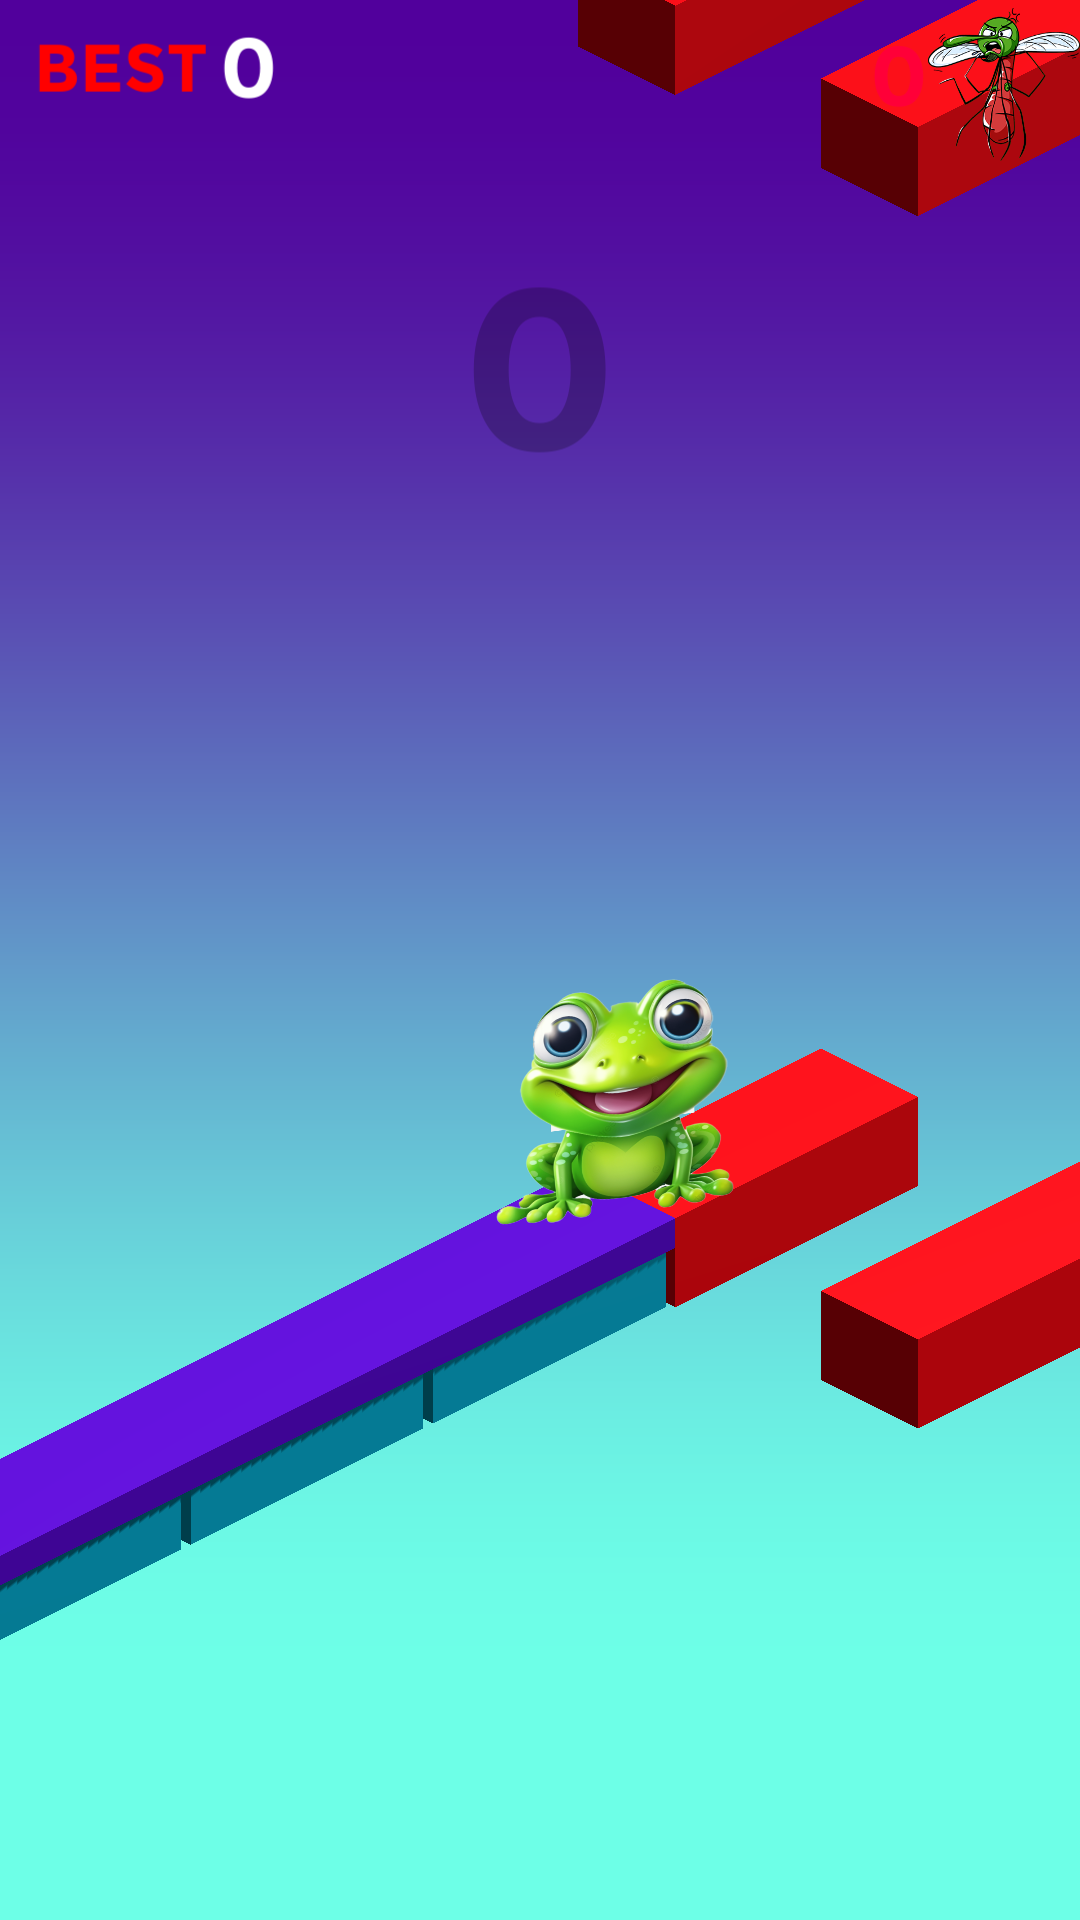 Screenshot of Frog Hustles